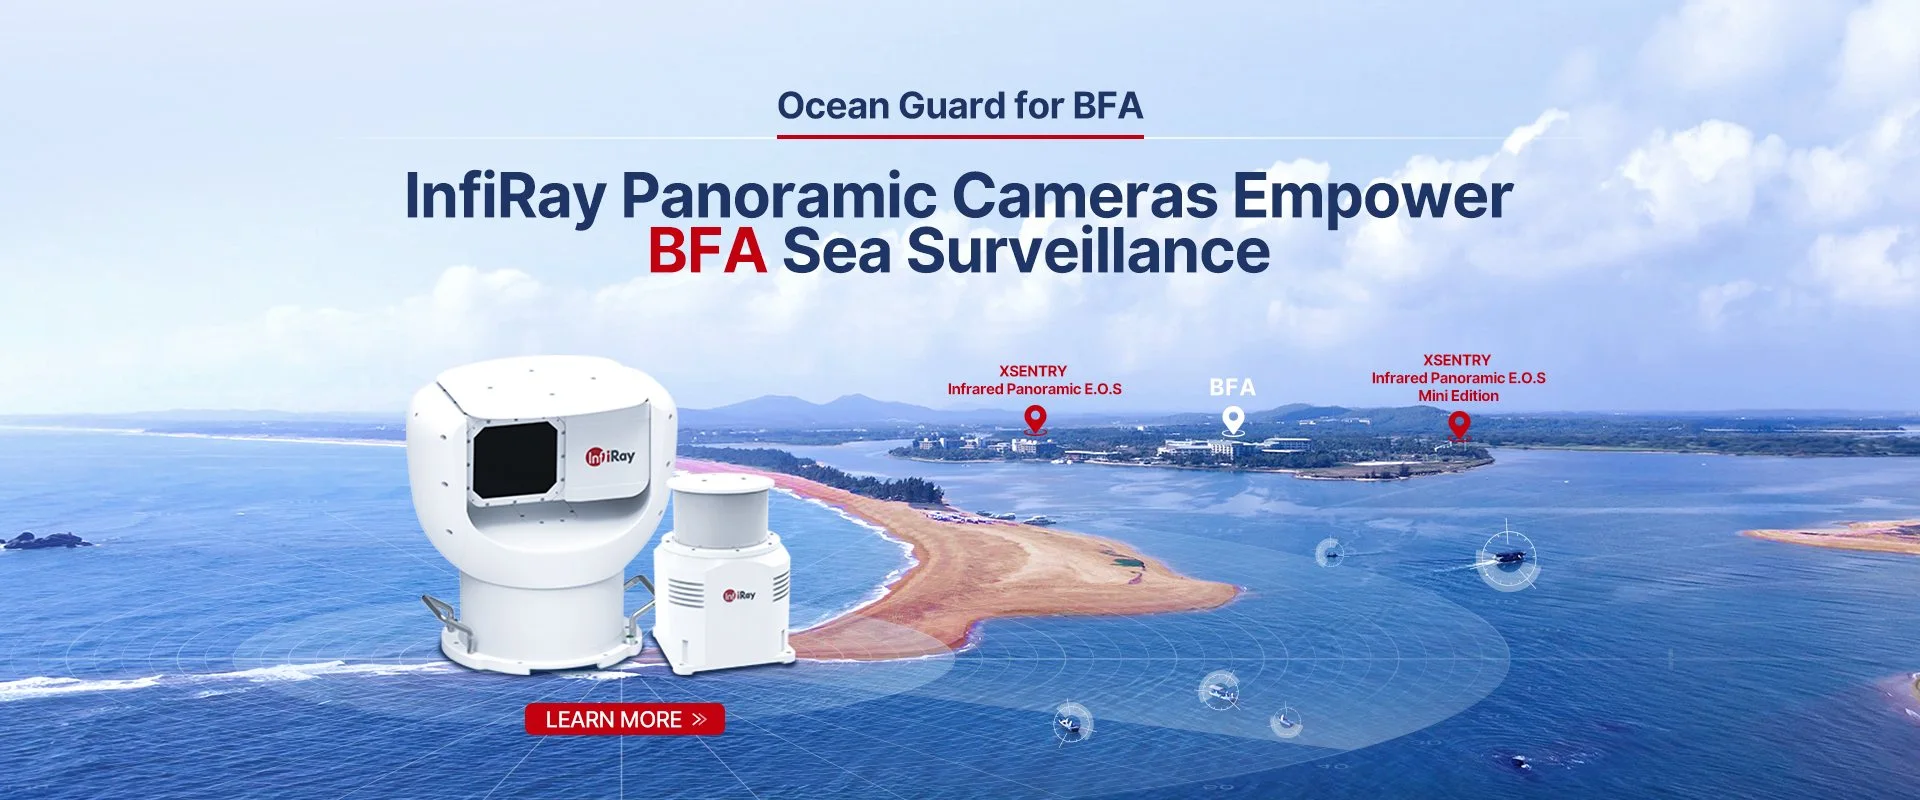 Ocean Guard for BFA